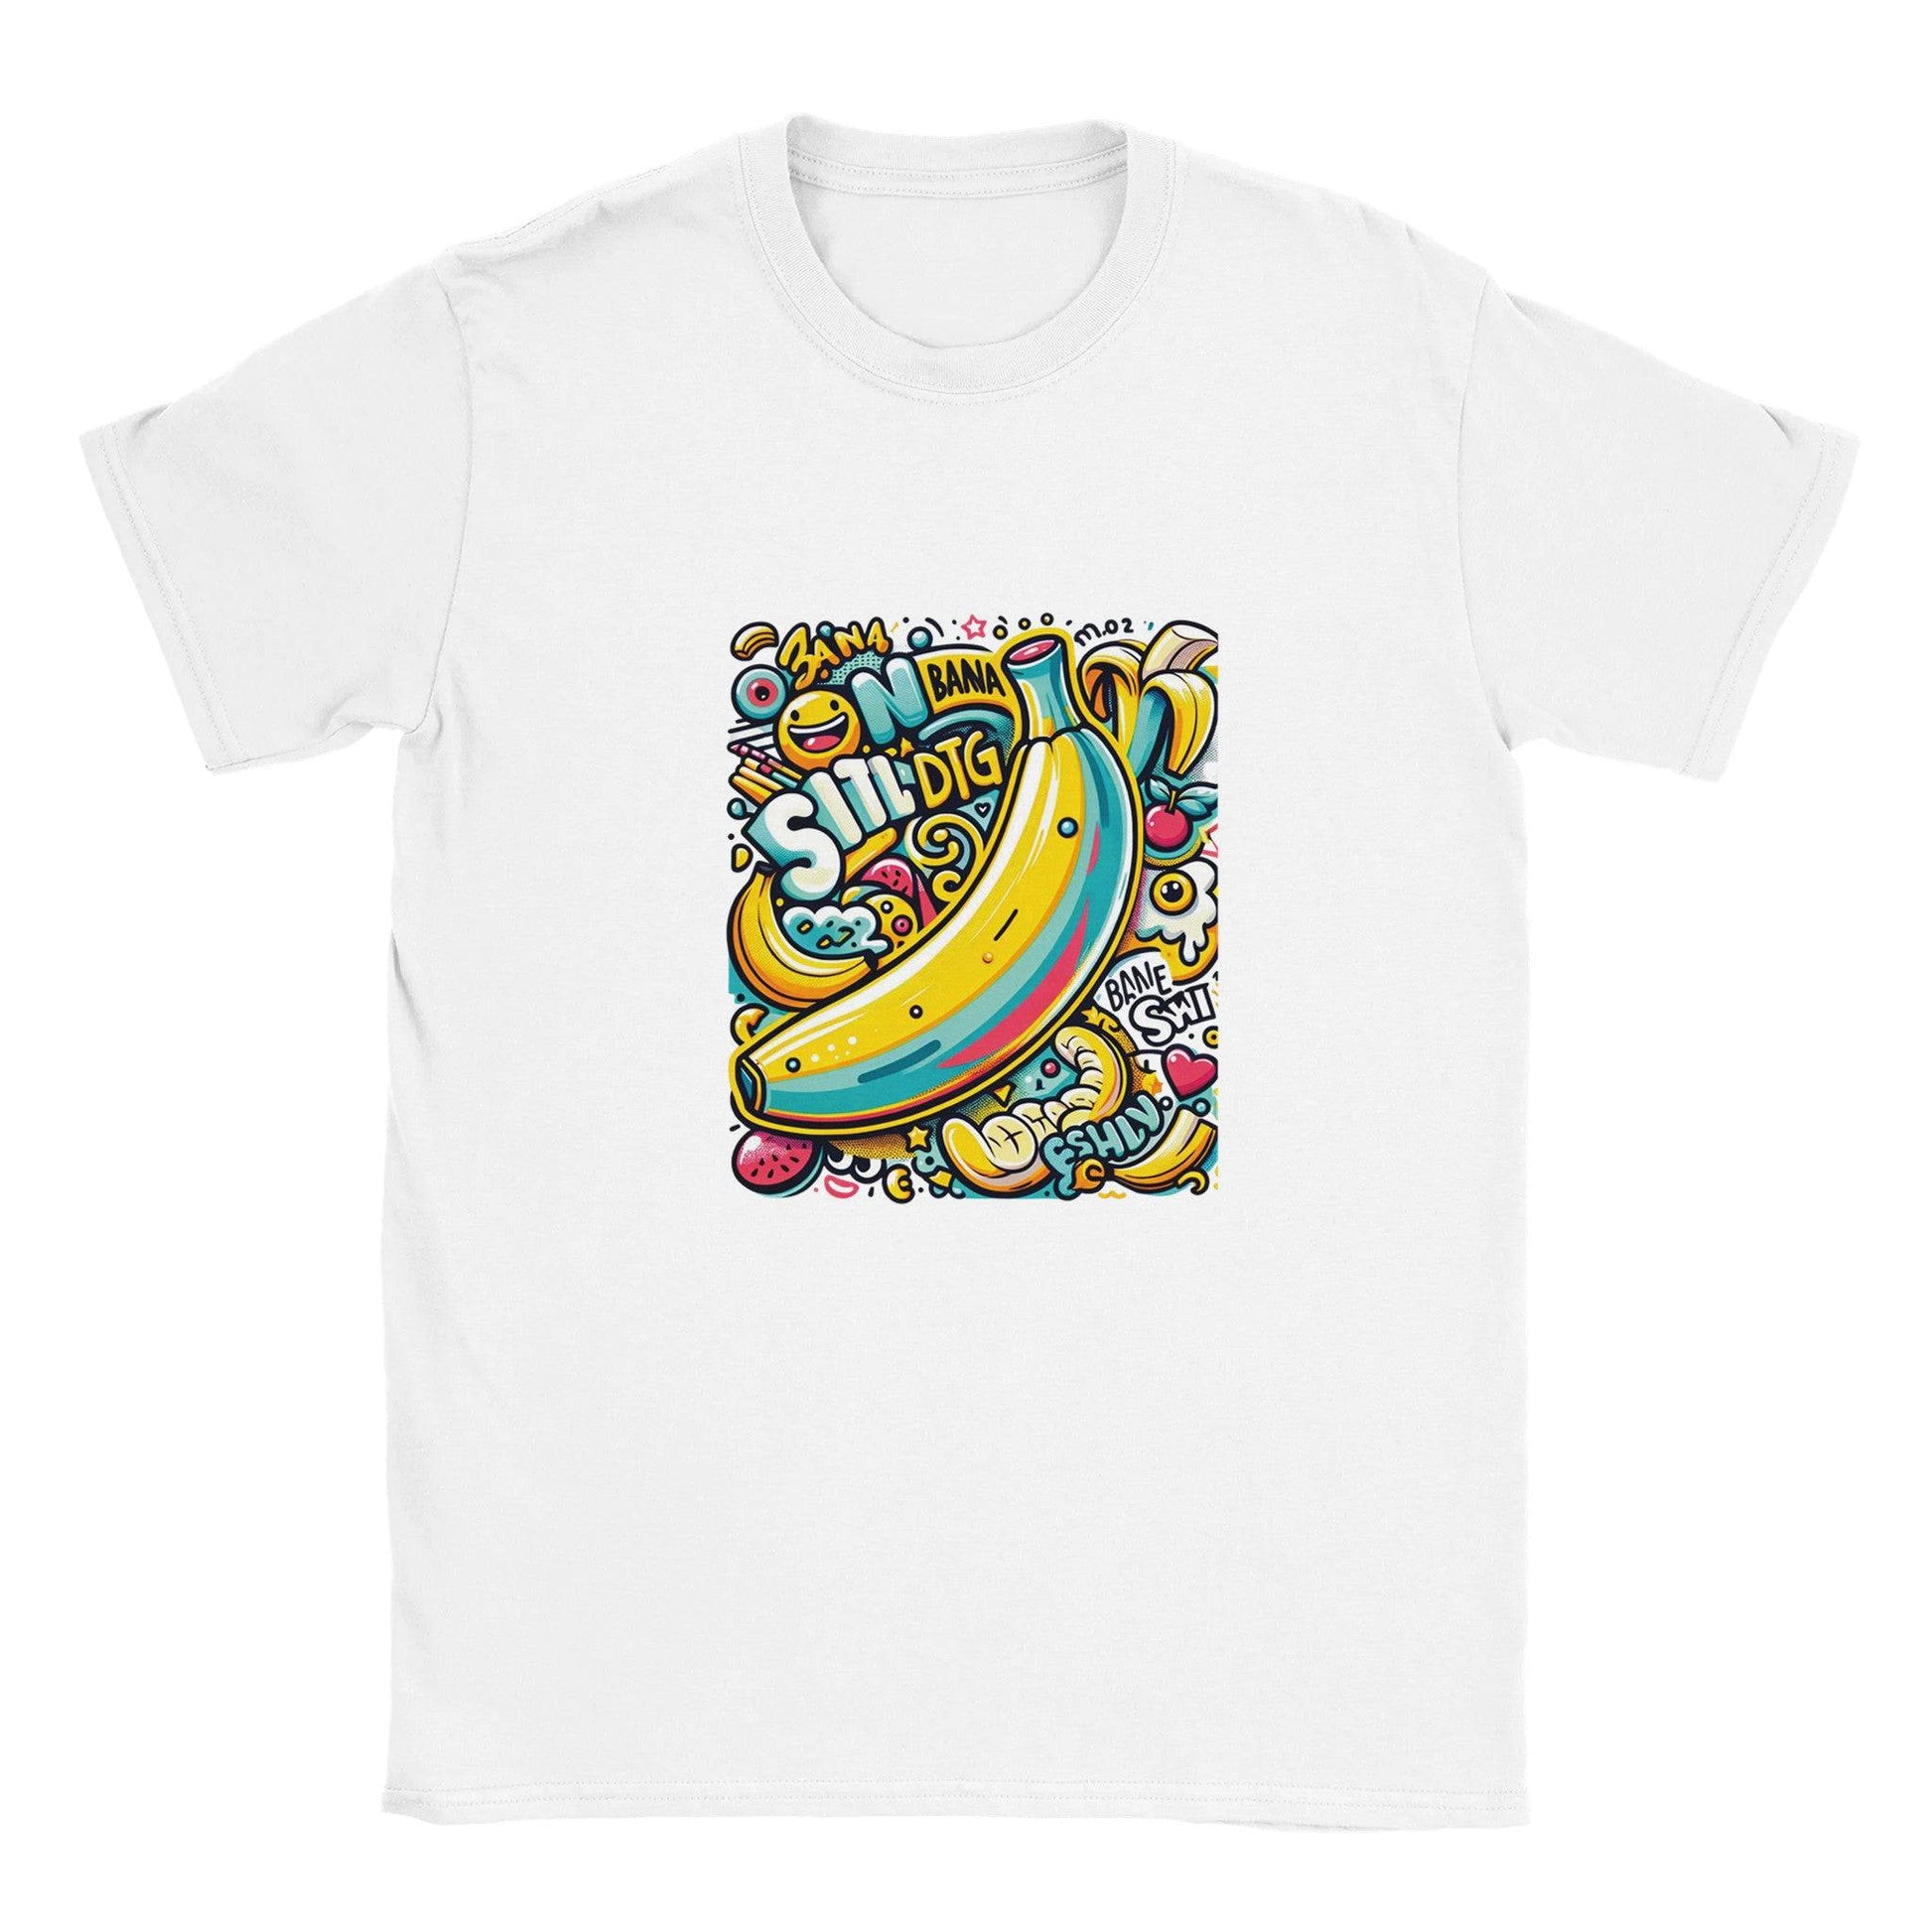 Classic Yellow banana t-shirt 100% breathable cotton - BeinCart